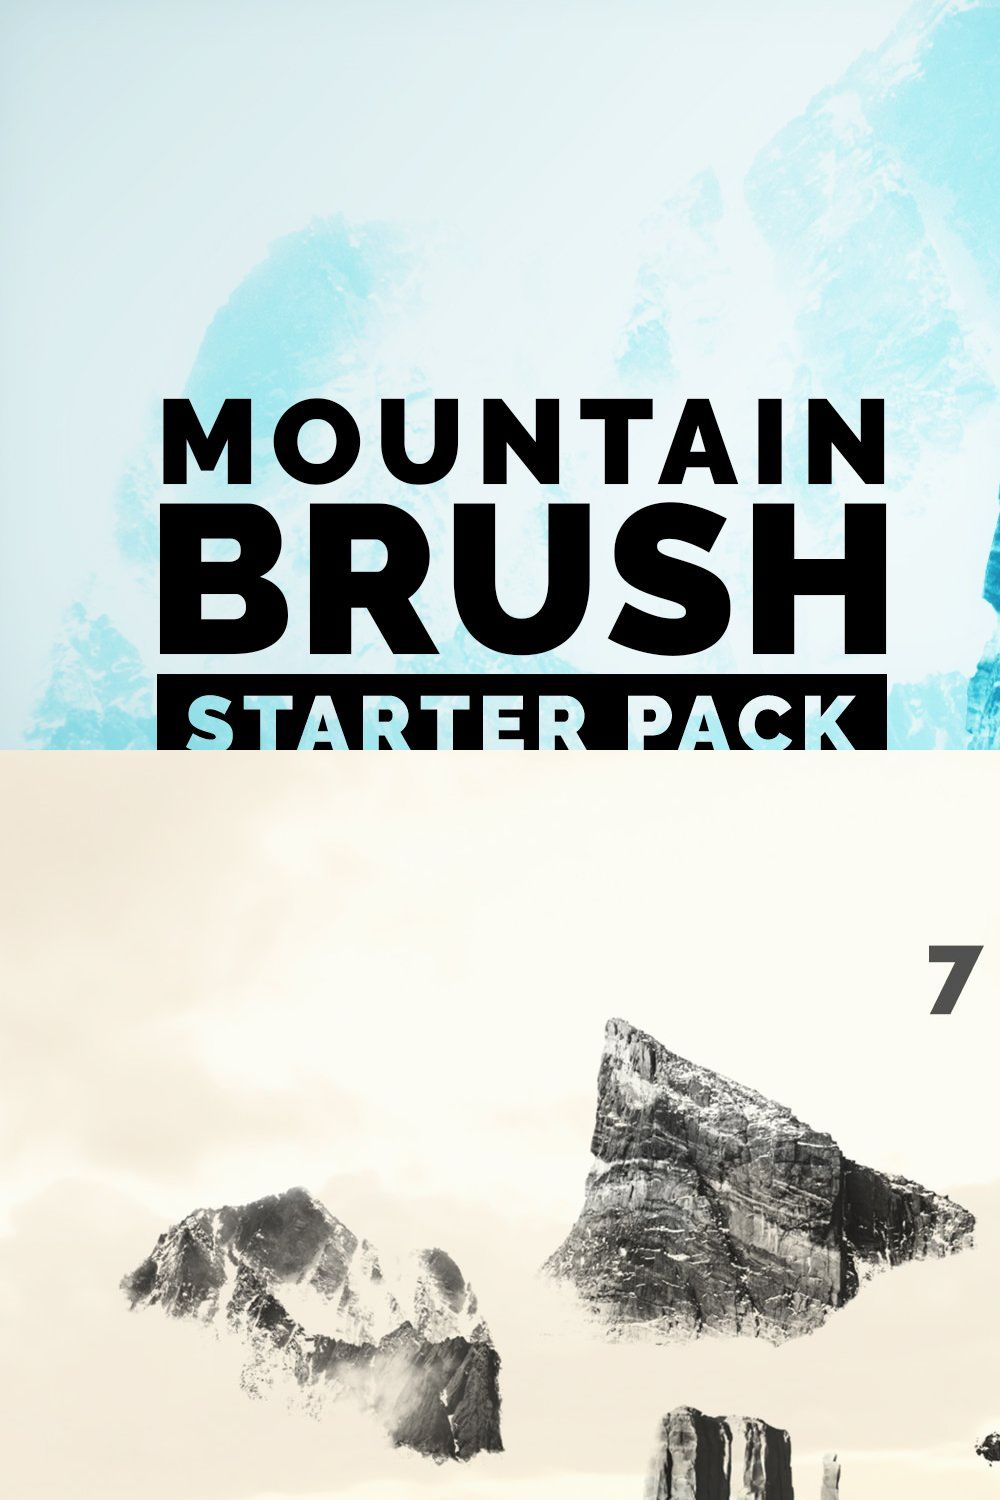 Mountain Brushes Starter Pack pinterest preview image.